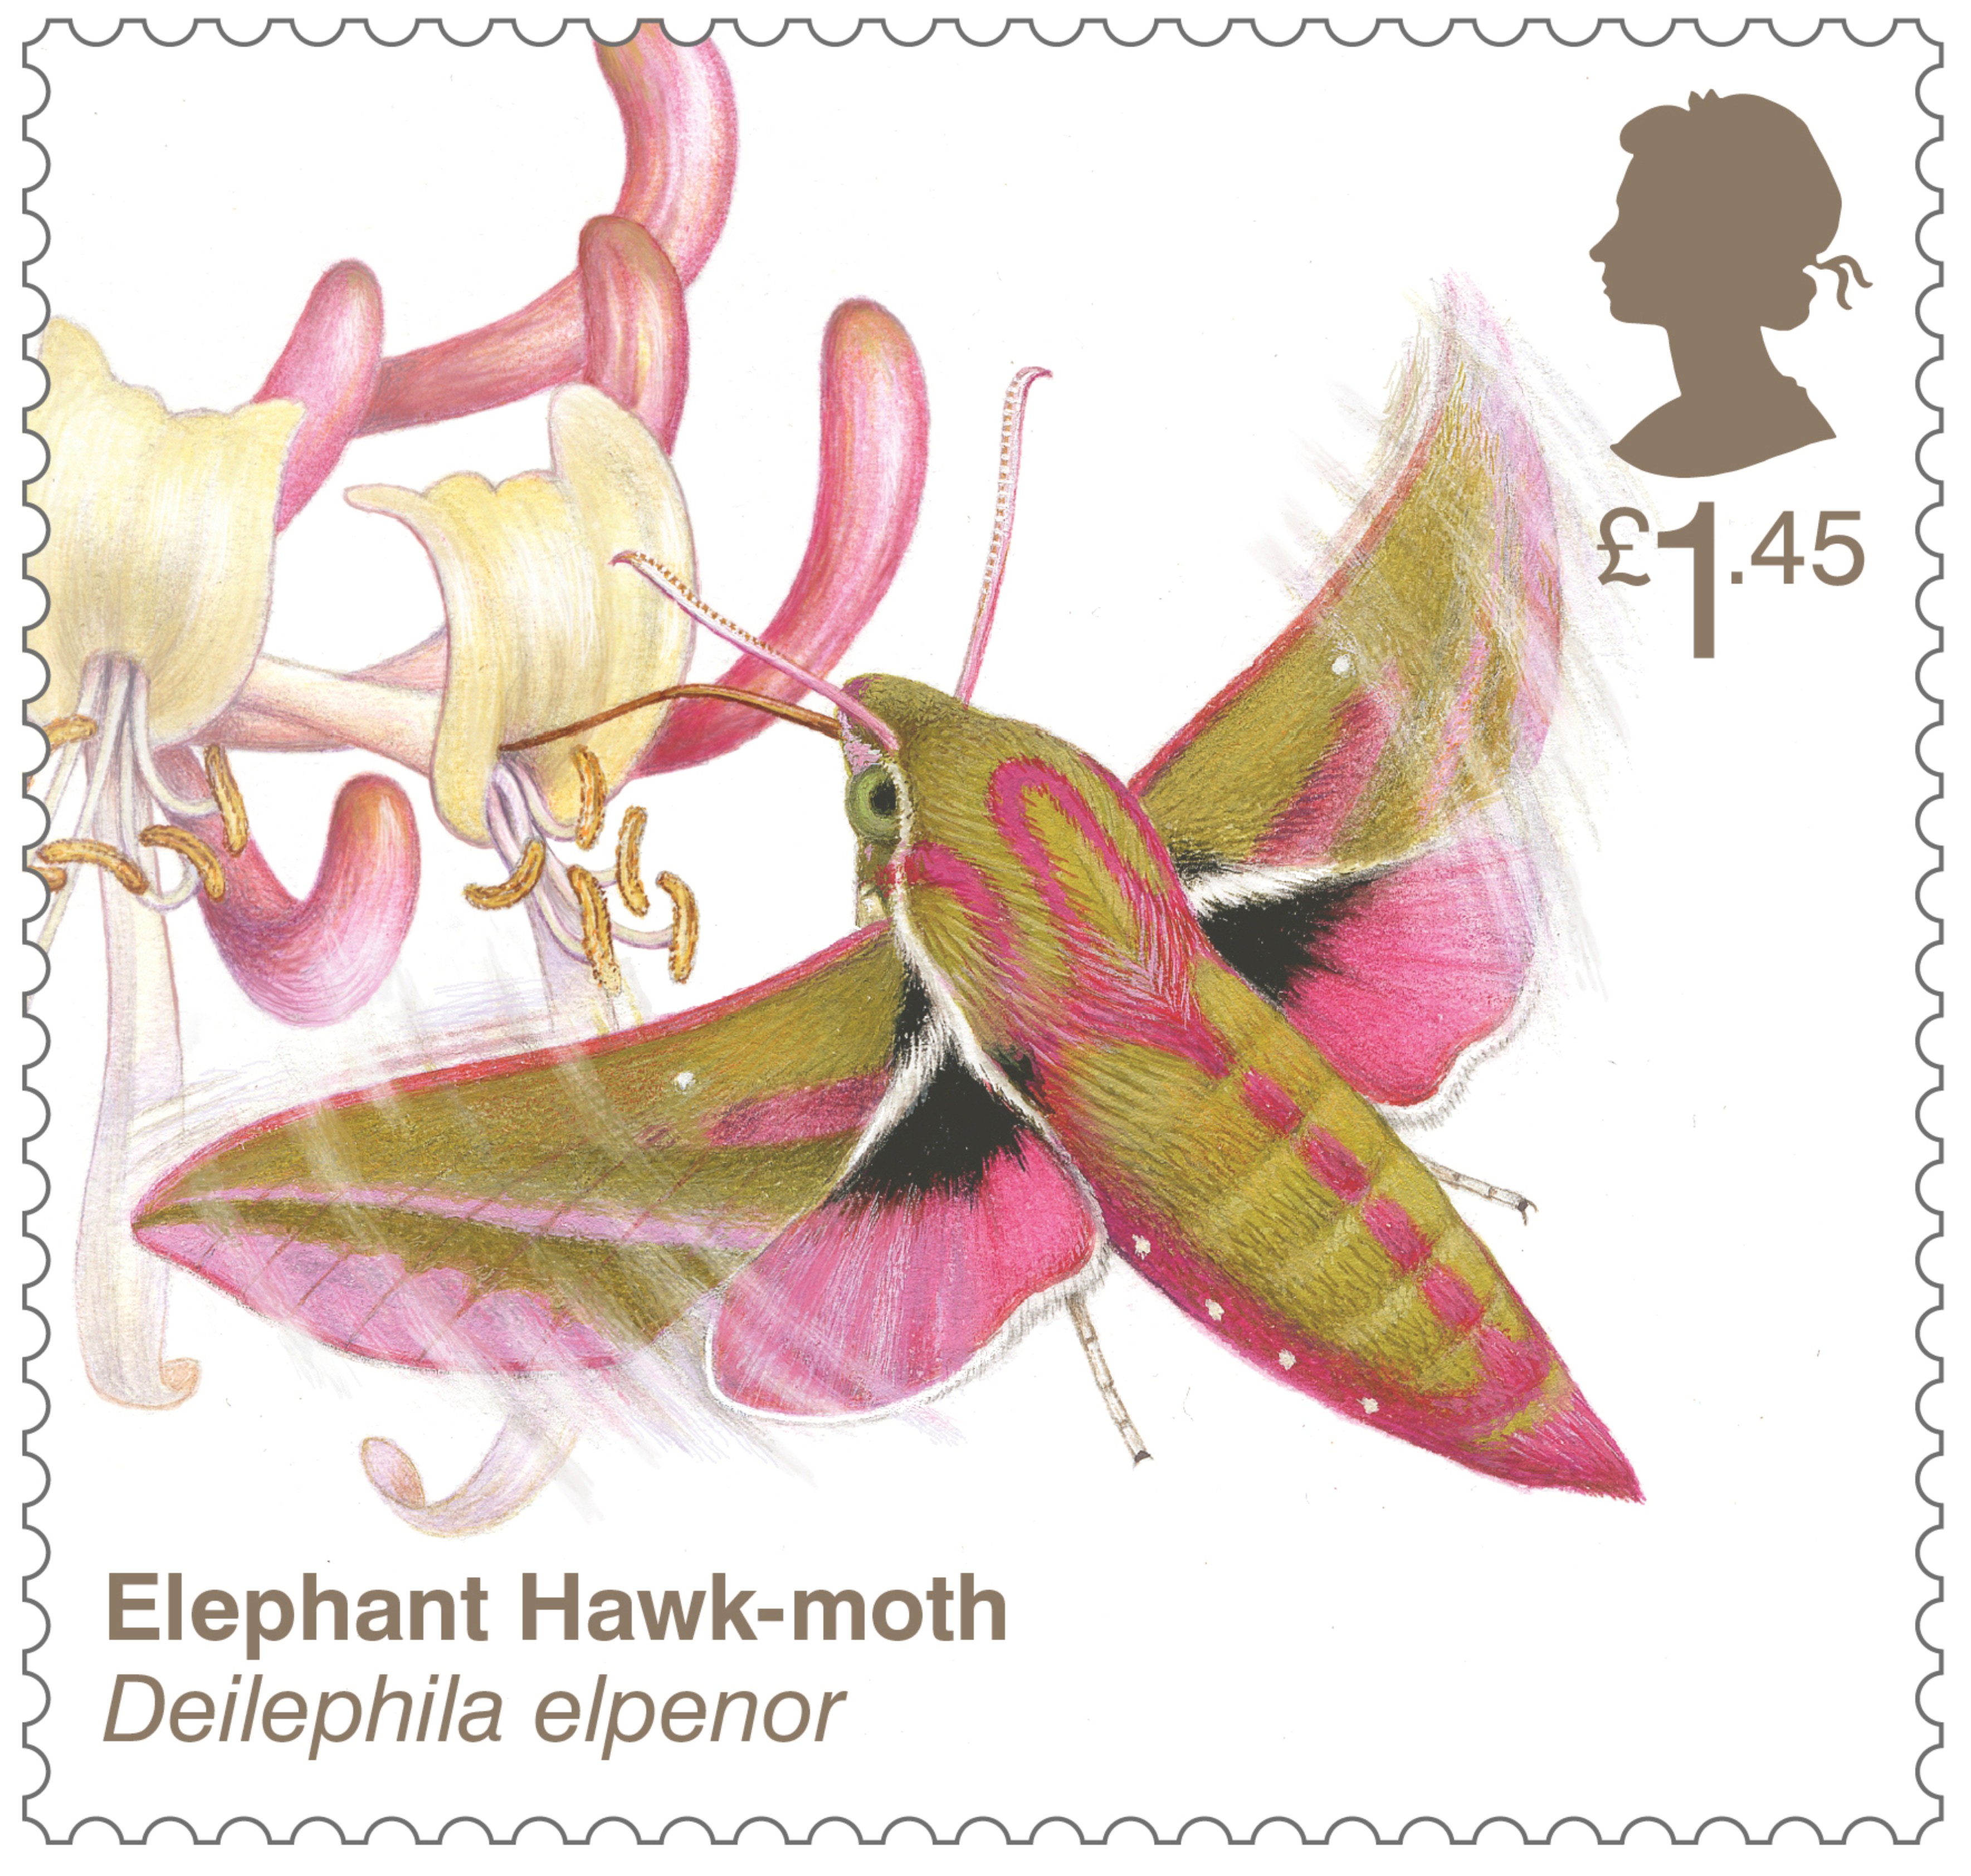 Elephant hawk-moth stamp